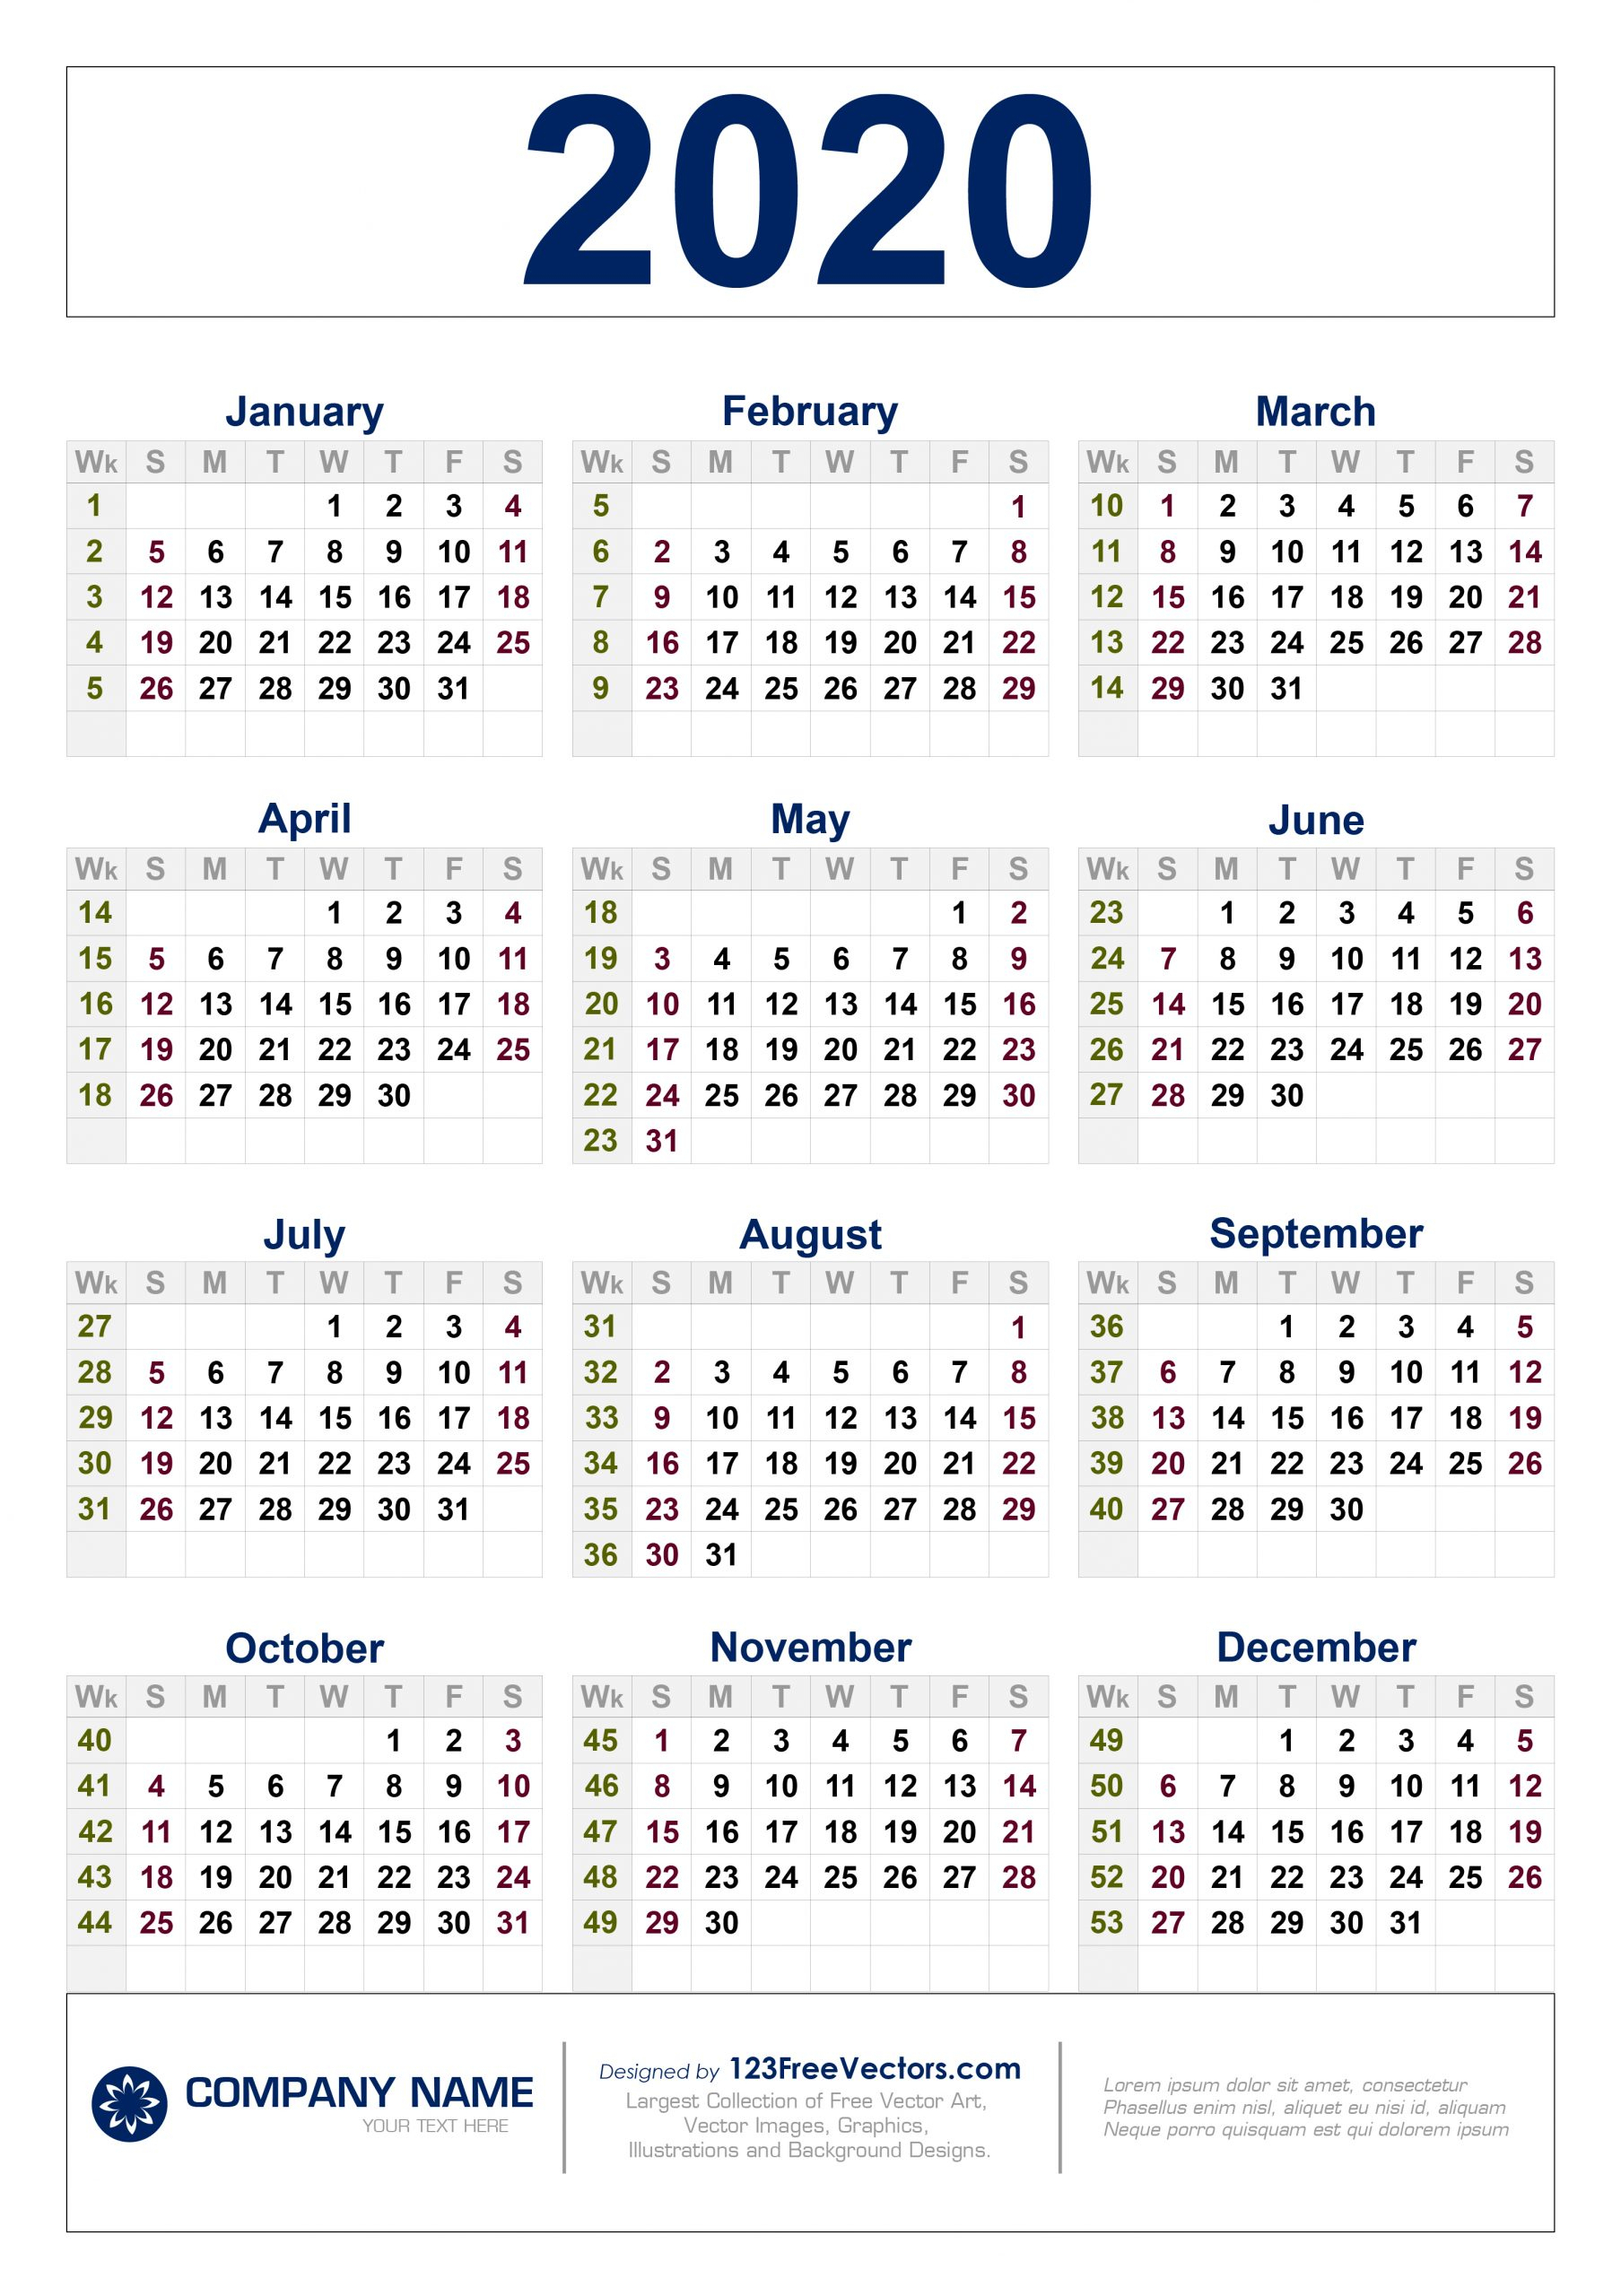 Get 2020 Monthly Calinder With Week Numbers | Calendar